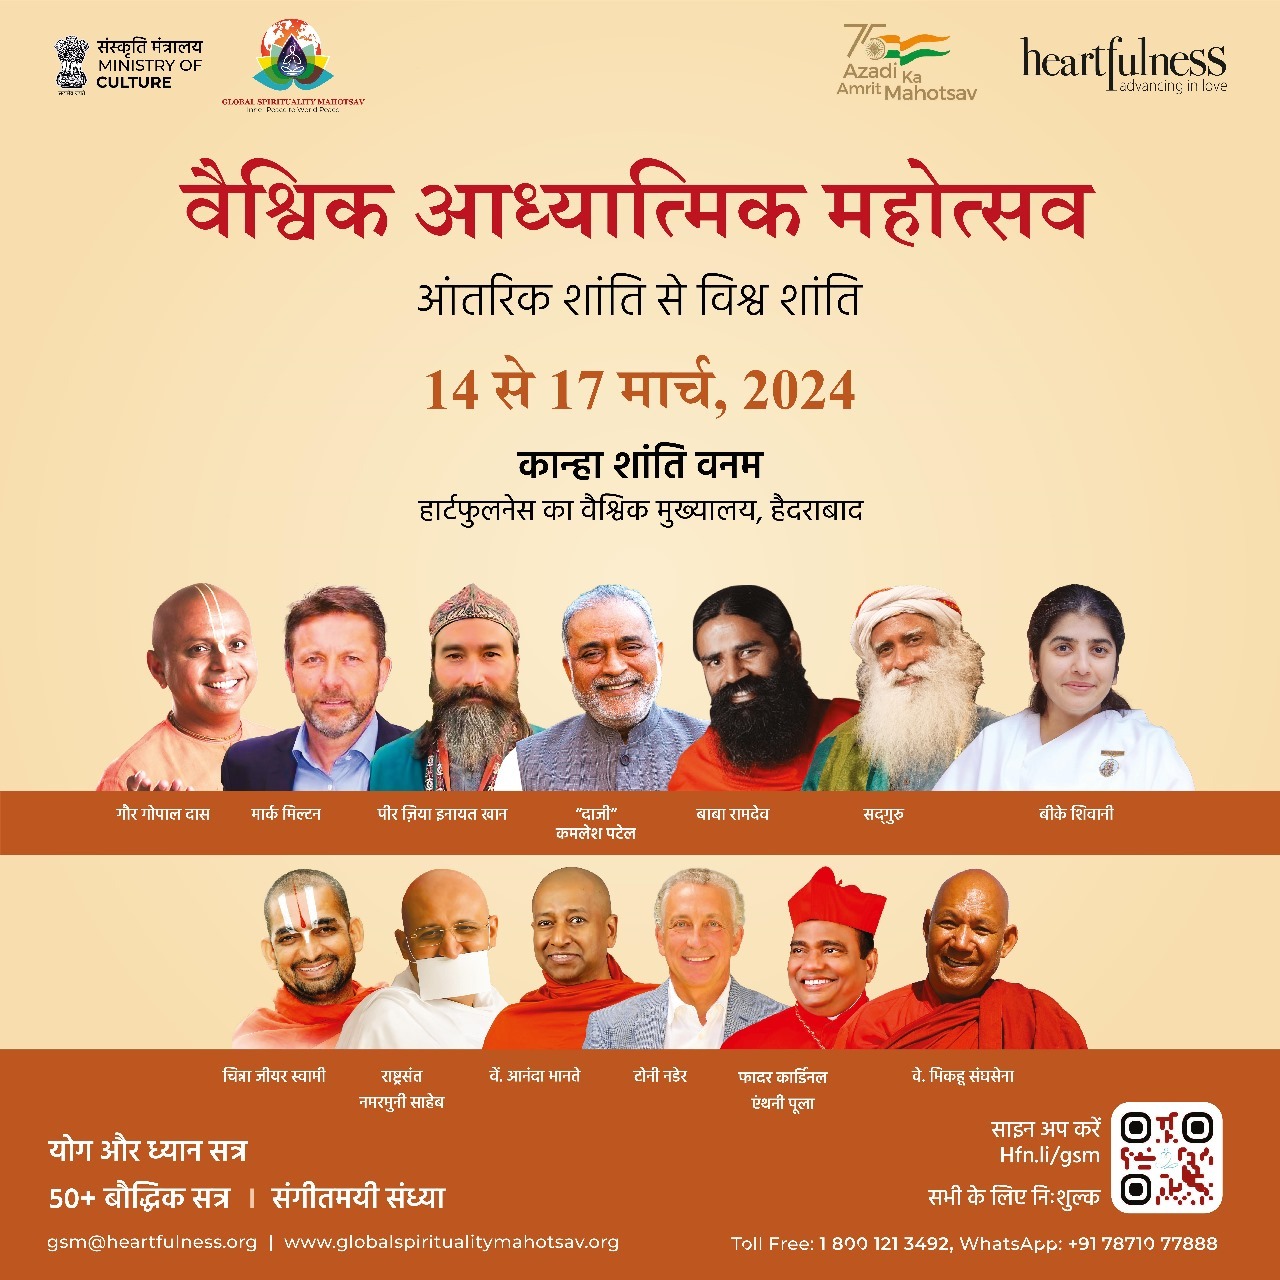 The Global Spiritual Mahotsav 2024 will be held from March 14-17, Hyderabad